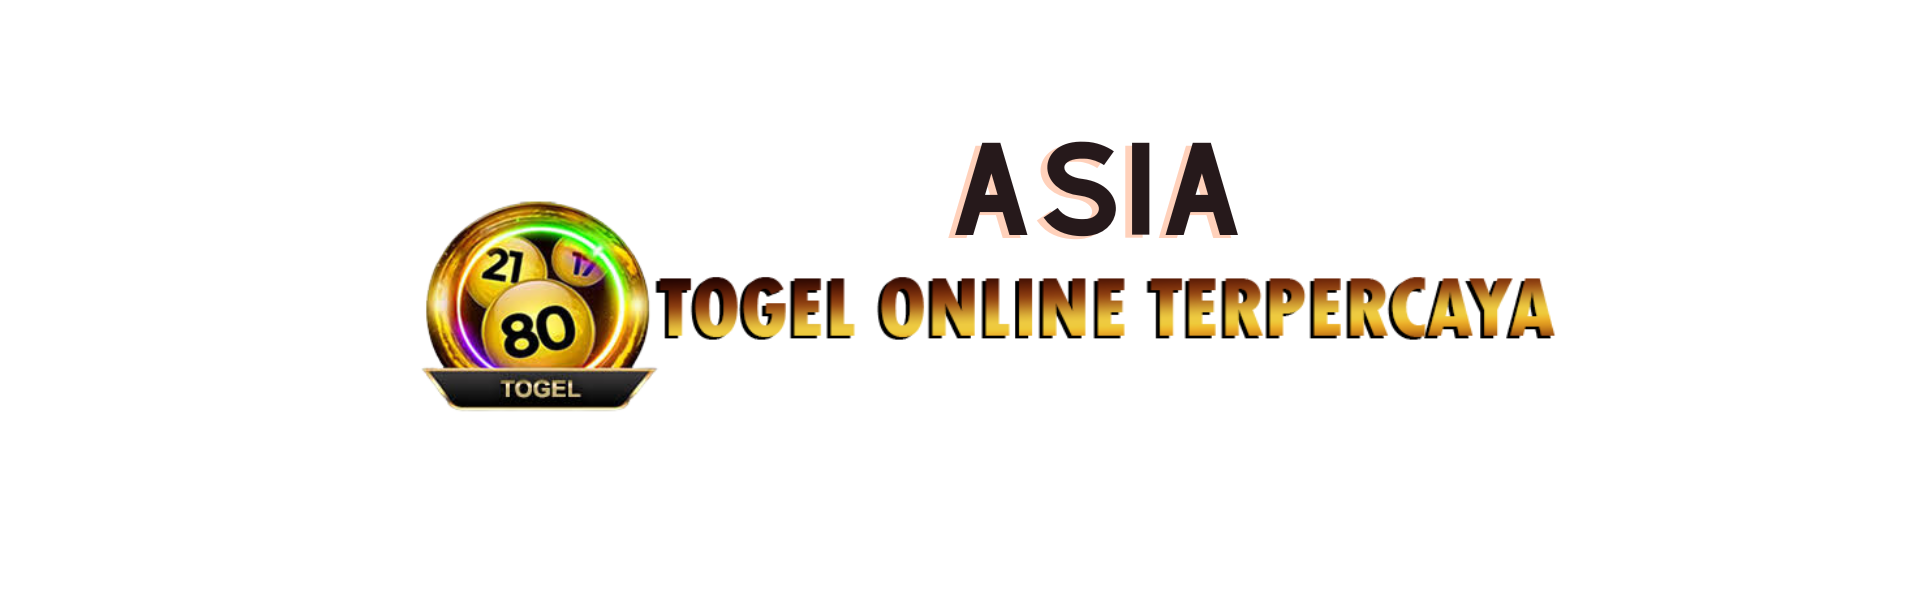 Asia Togel